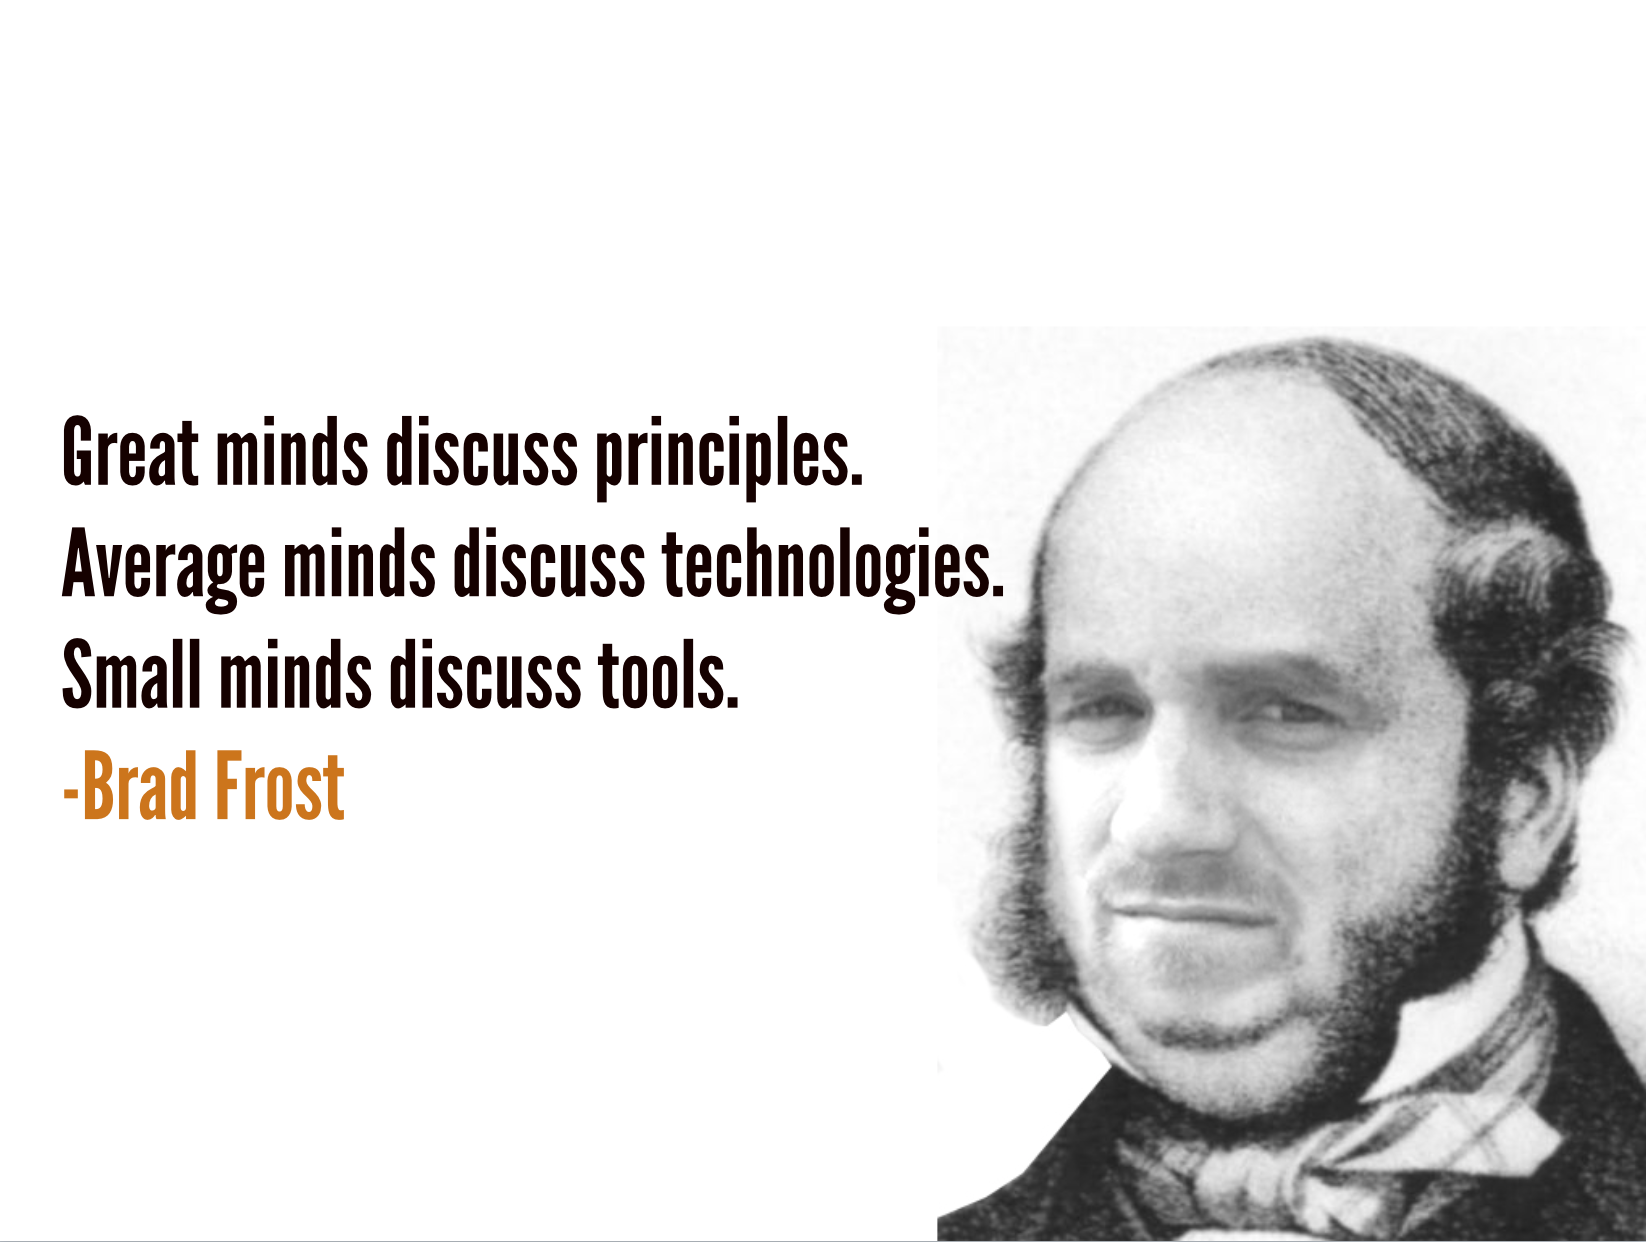 Great minds discuss principles. Average minds discuss technologies. Small minds discuss tools.